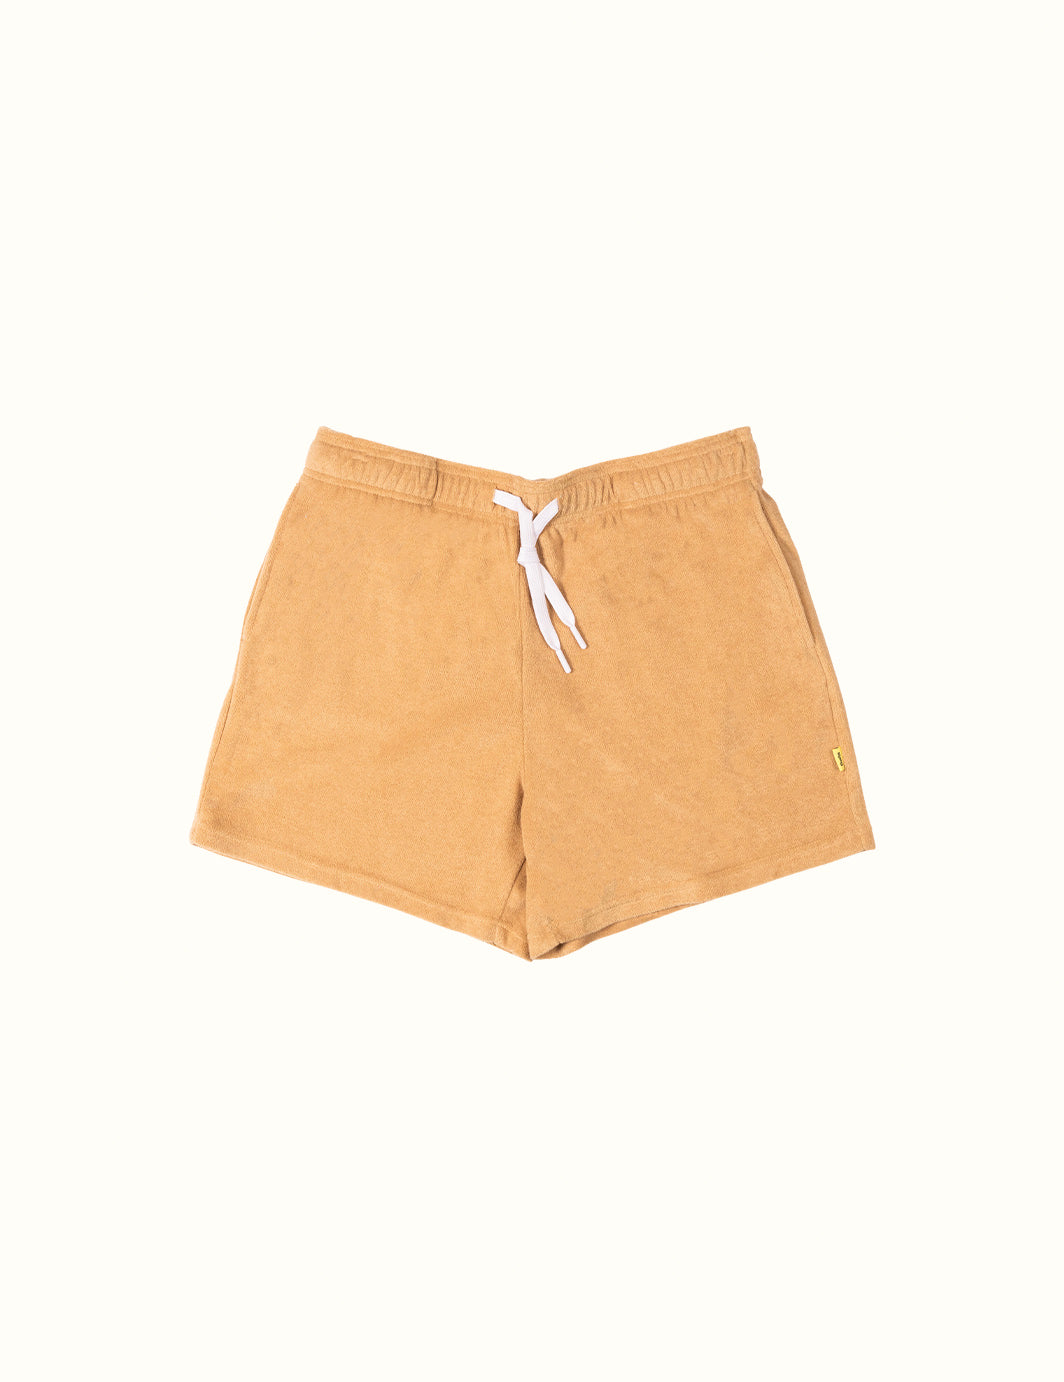 Terry Cloth Shorts | Terry Shorts | Men's Terry Cloth Shorts | Cloth ...